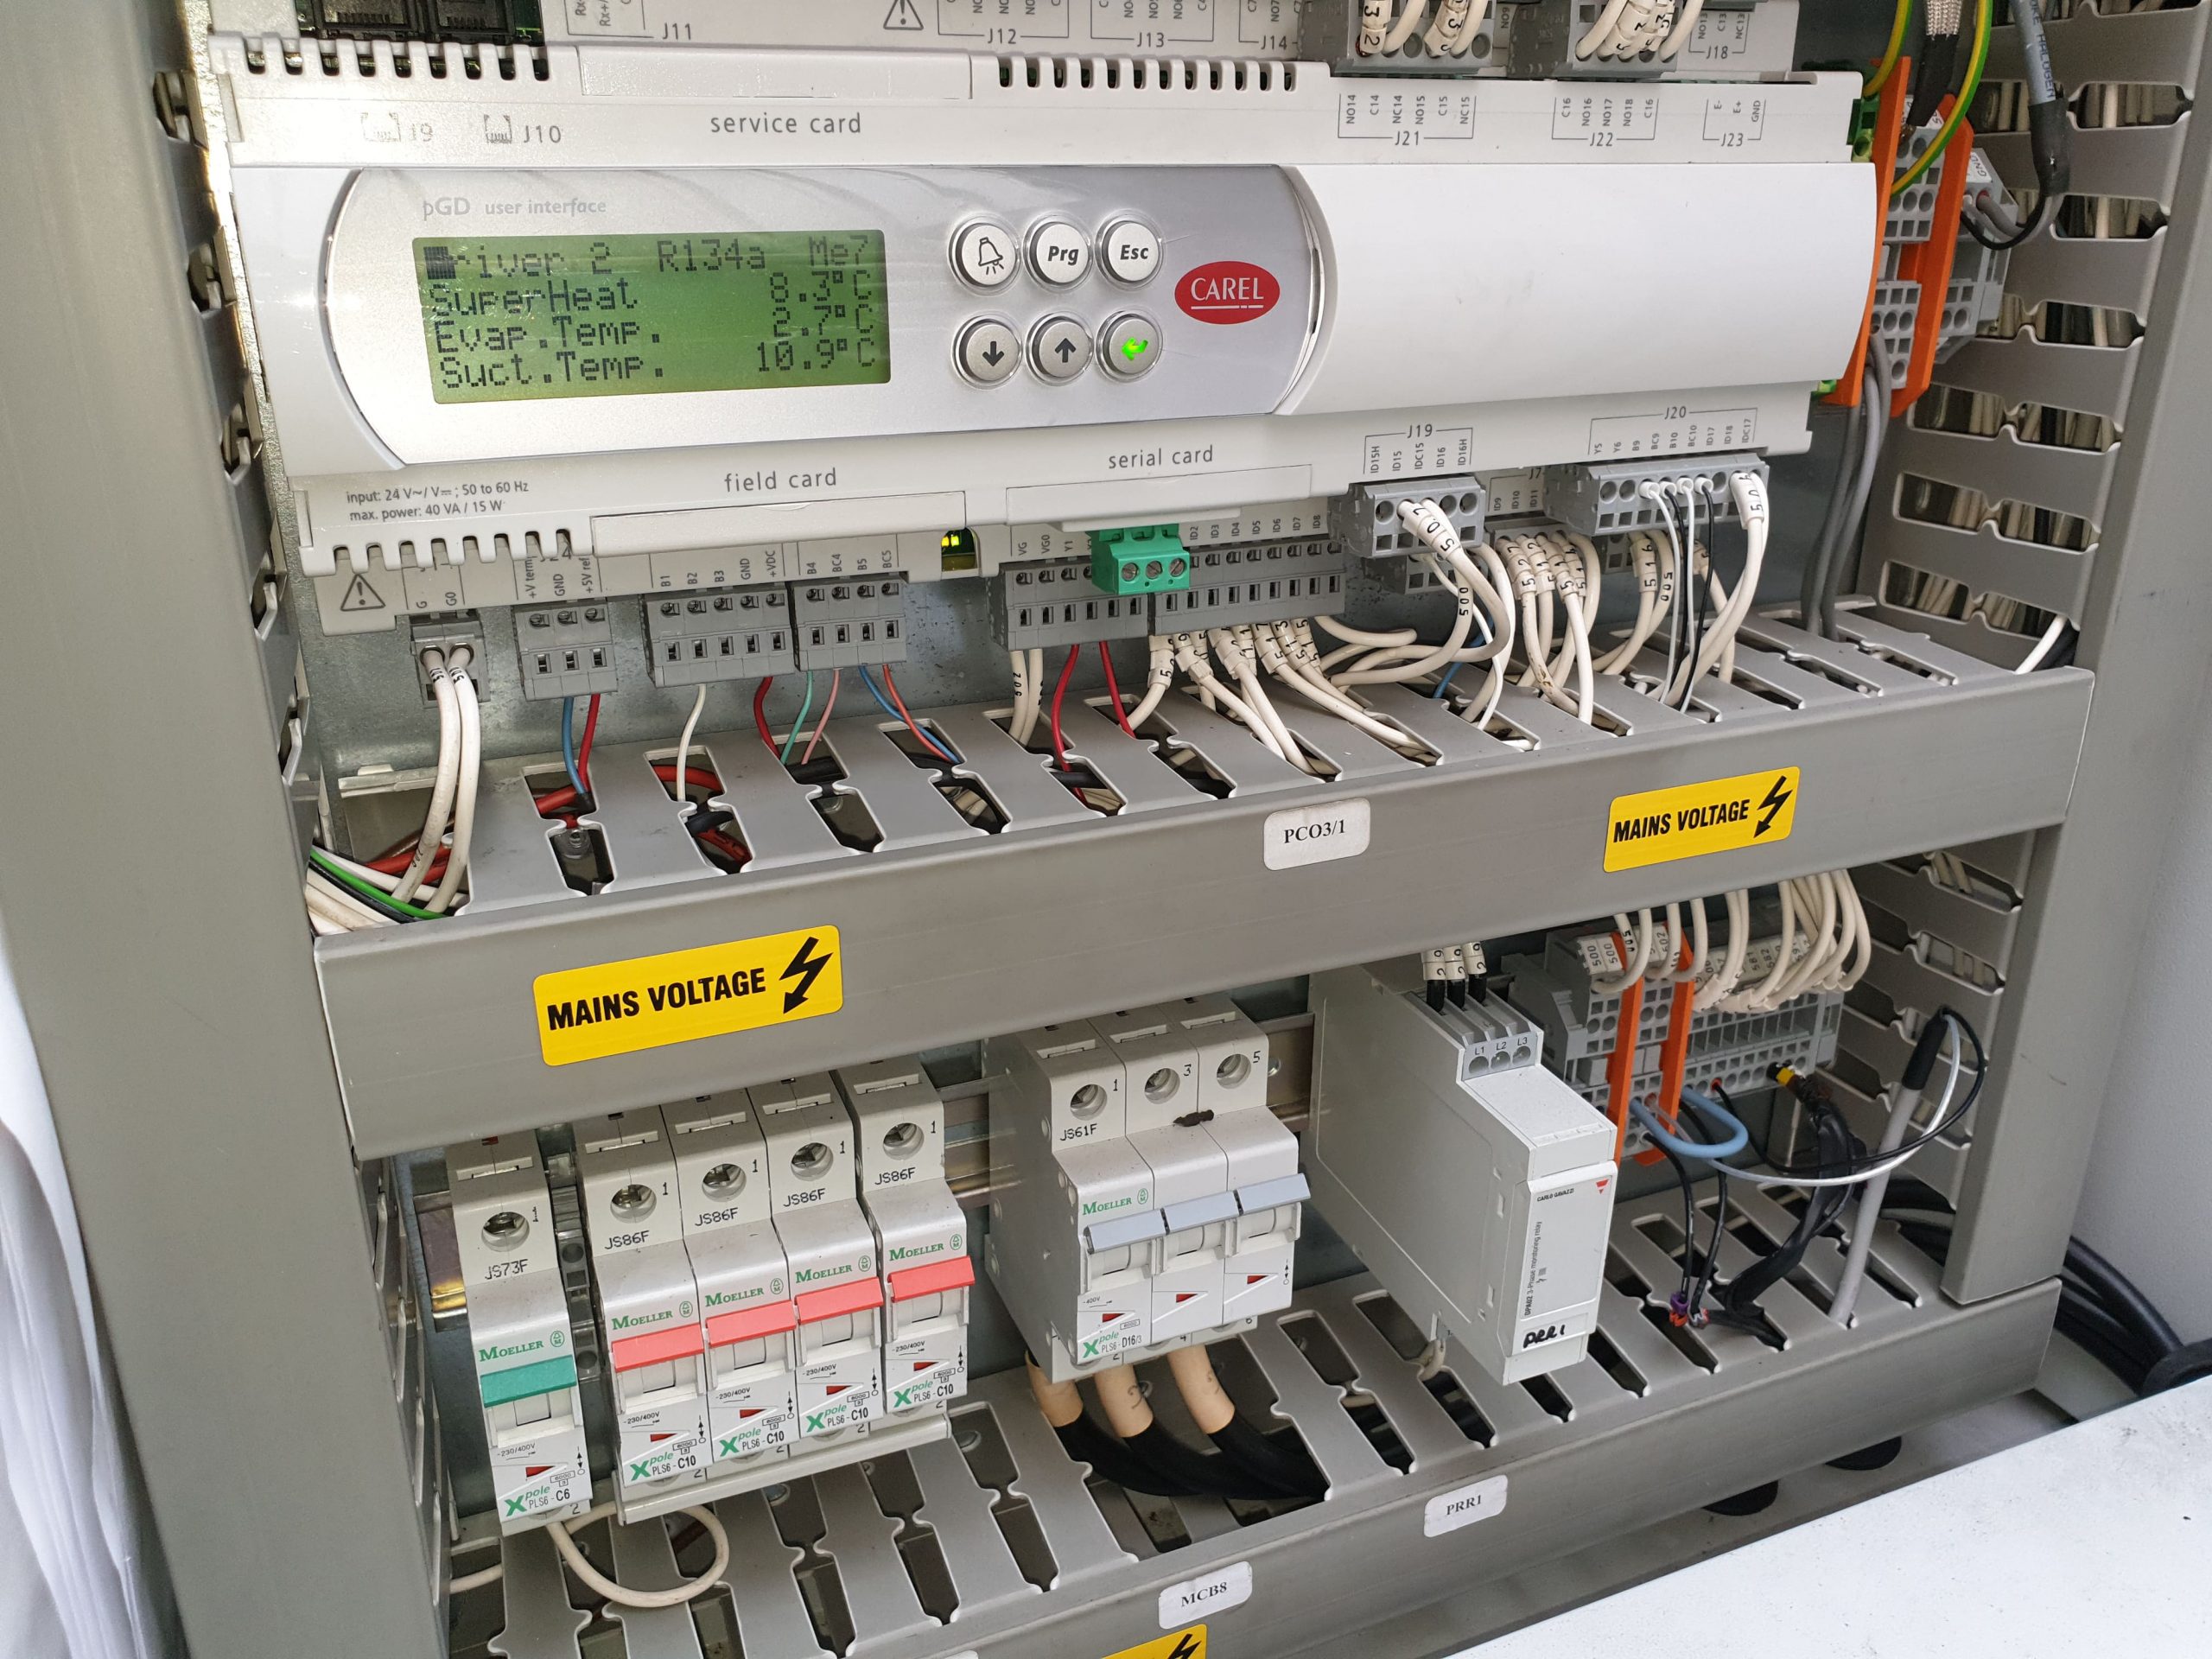 Carel controller showing R134a refrigerant readings during preventative chiller maintenance